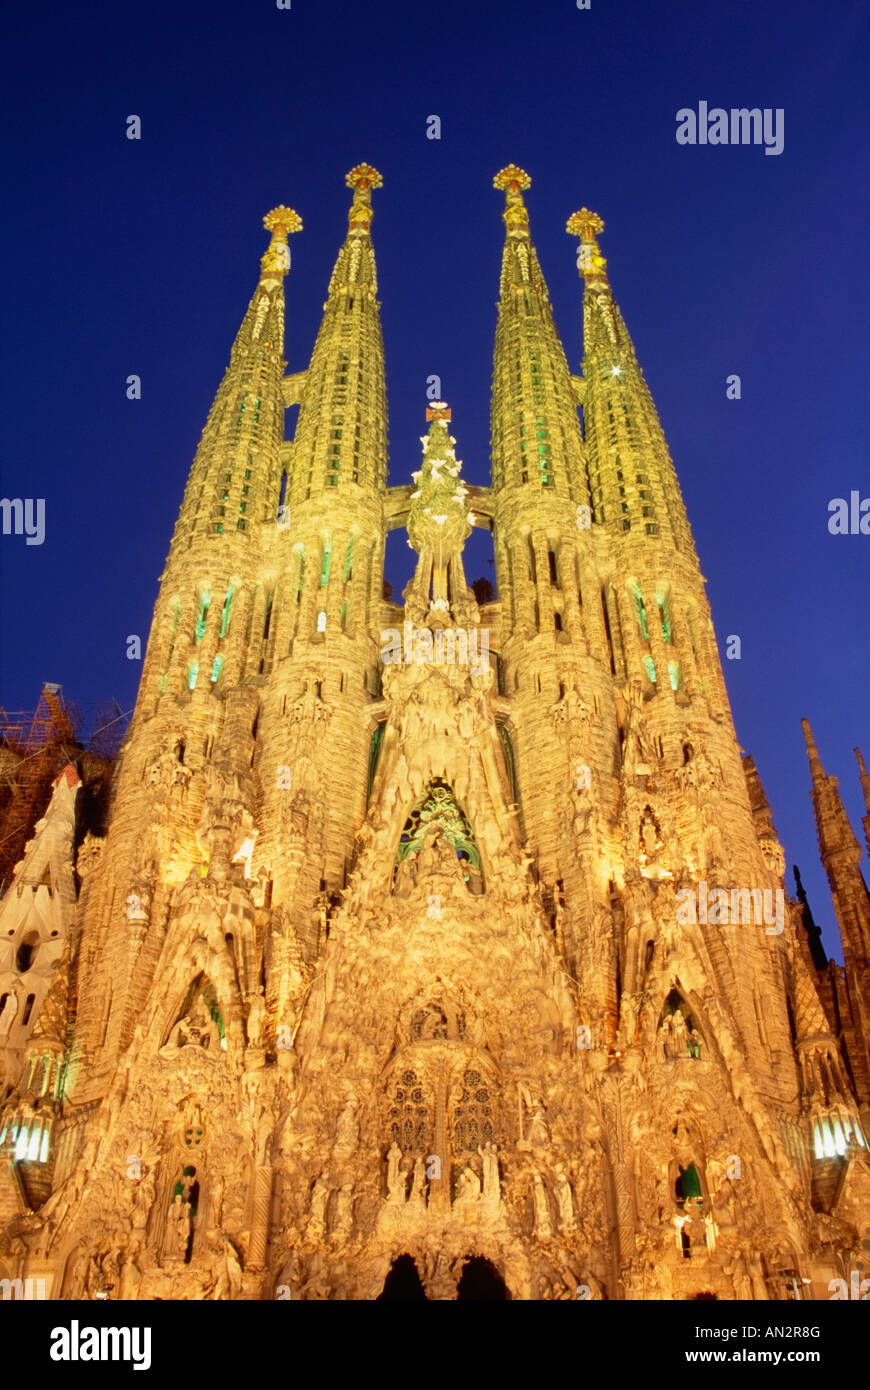 Church of the Holy Family, Barcelona, Spain Stock Photo - Alamy